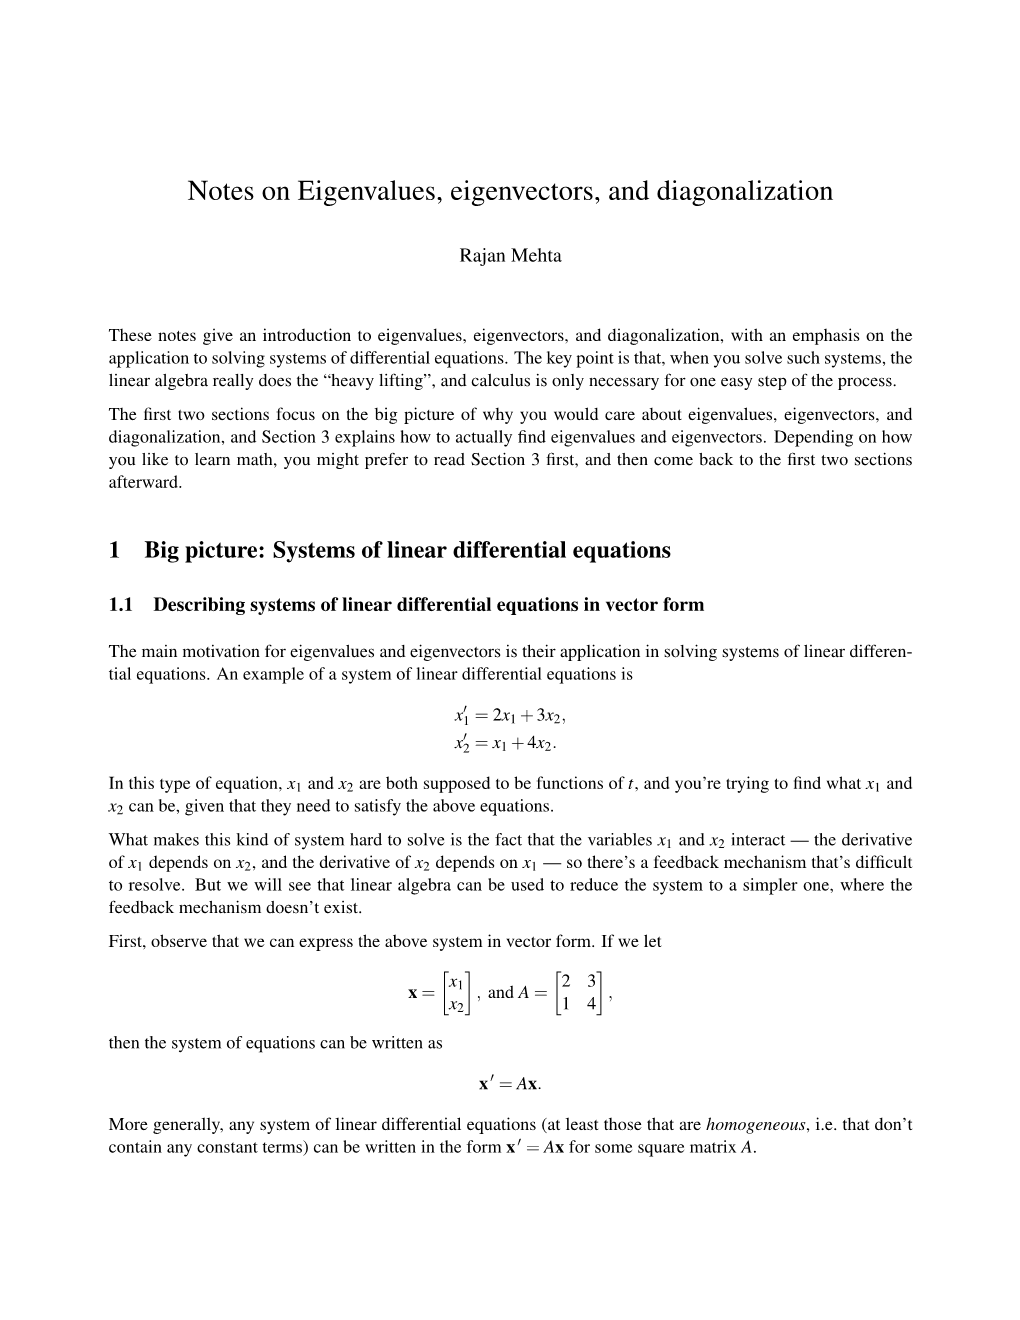 Notes on Eigenvalues, Eigenvectors, and Diagonalization